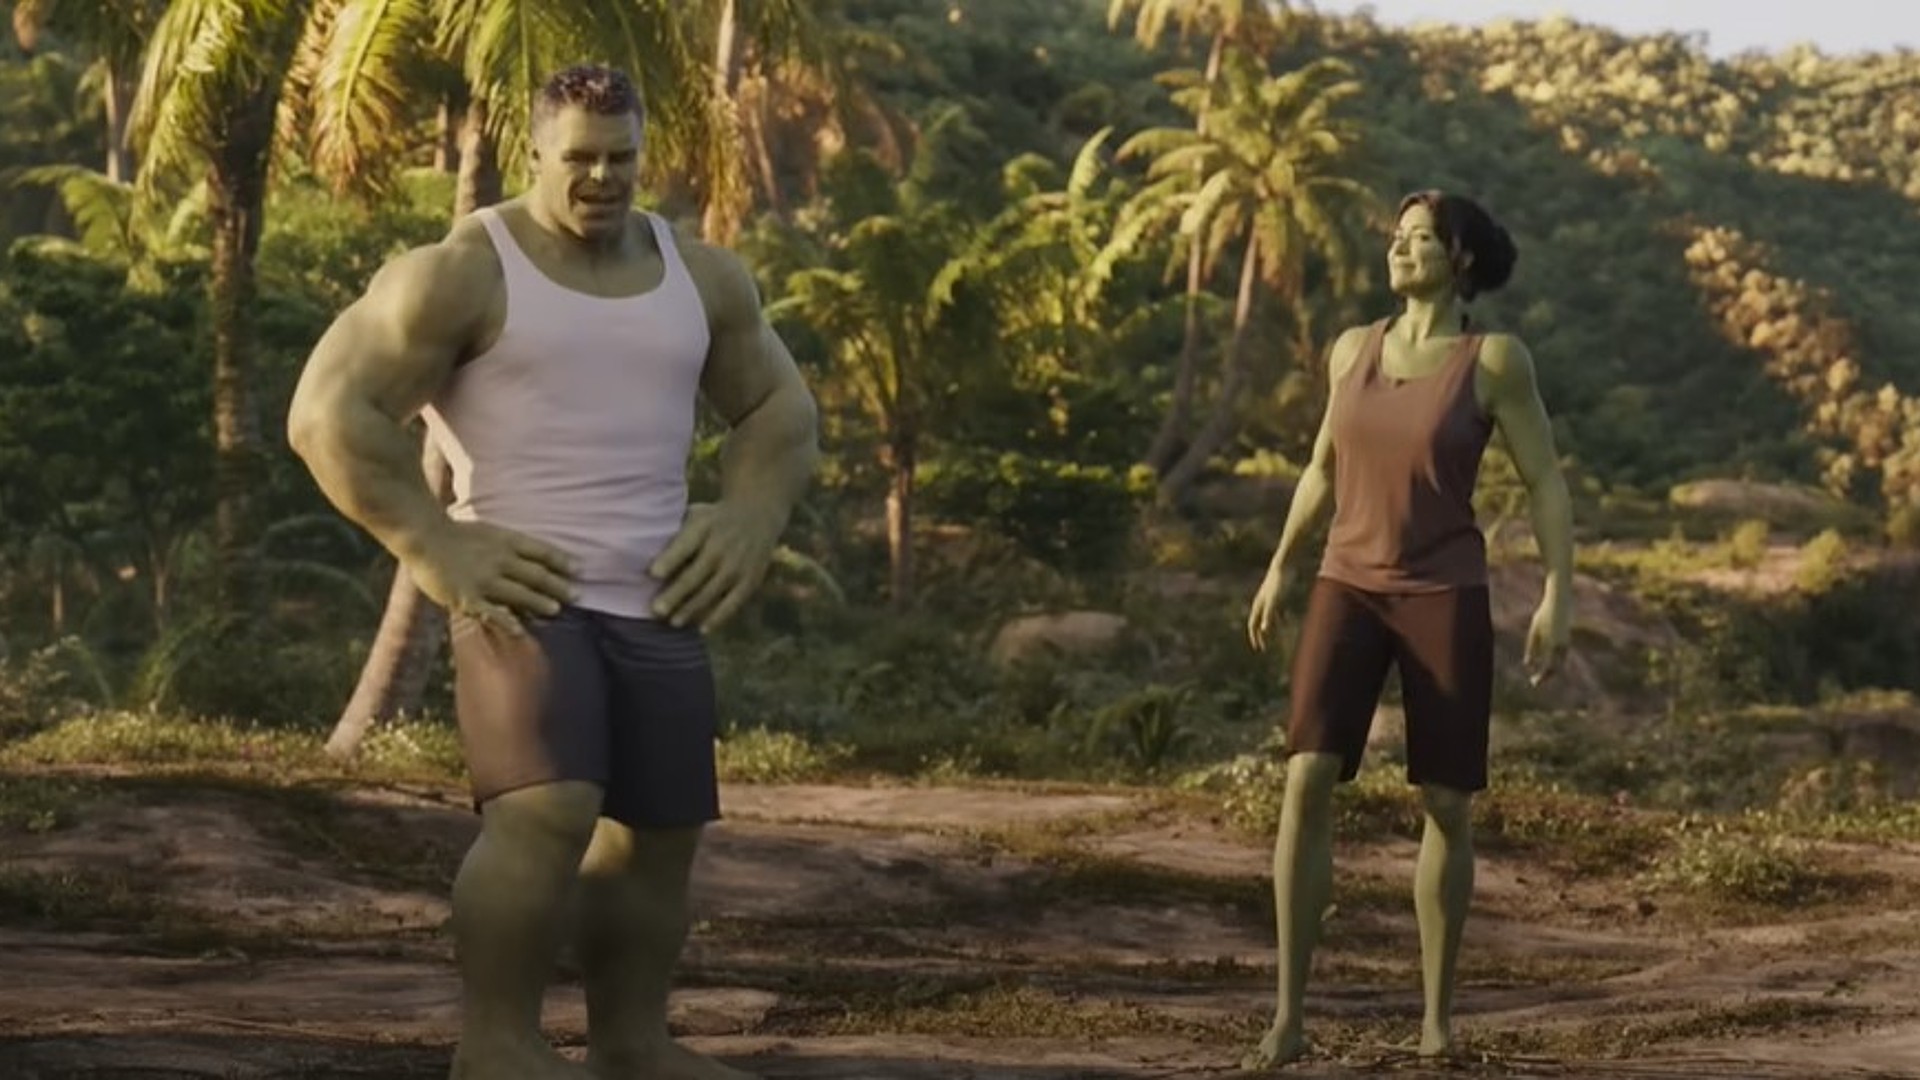 Mulher-Hulk Marvel conserta visual do filho do Hulk em imagem inédita